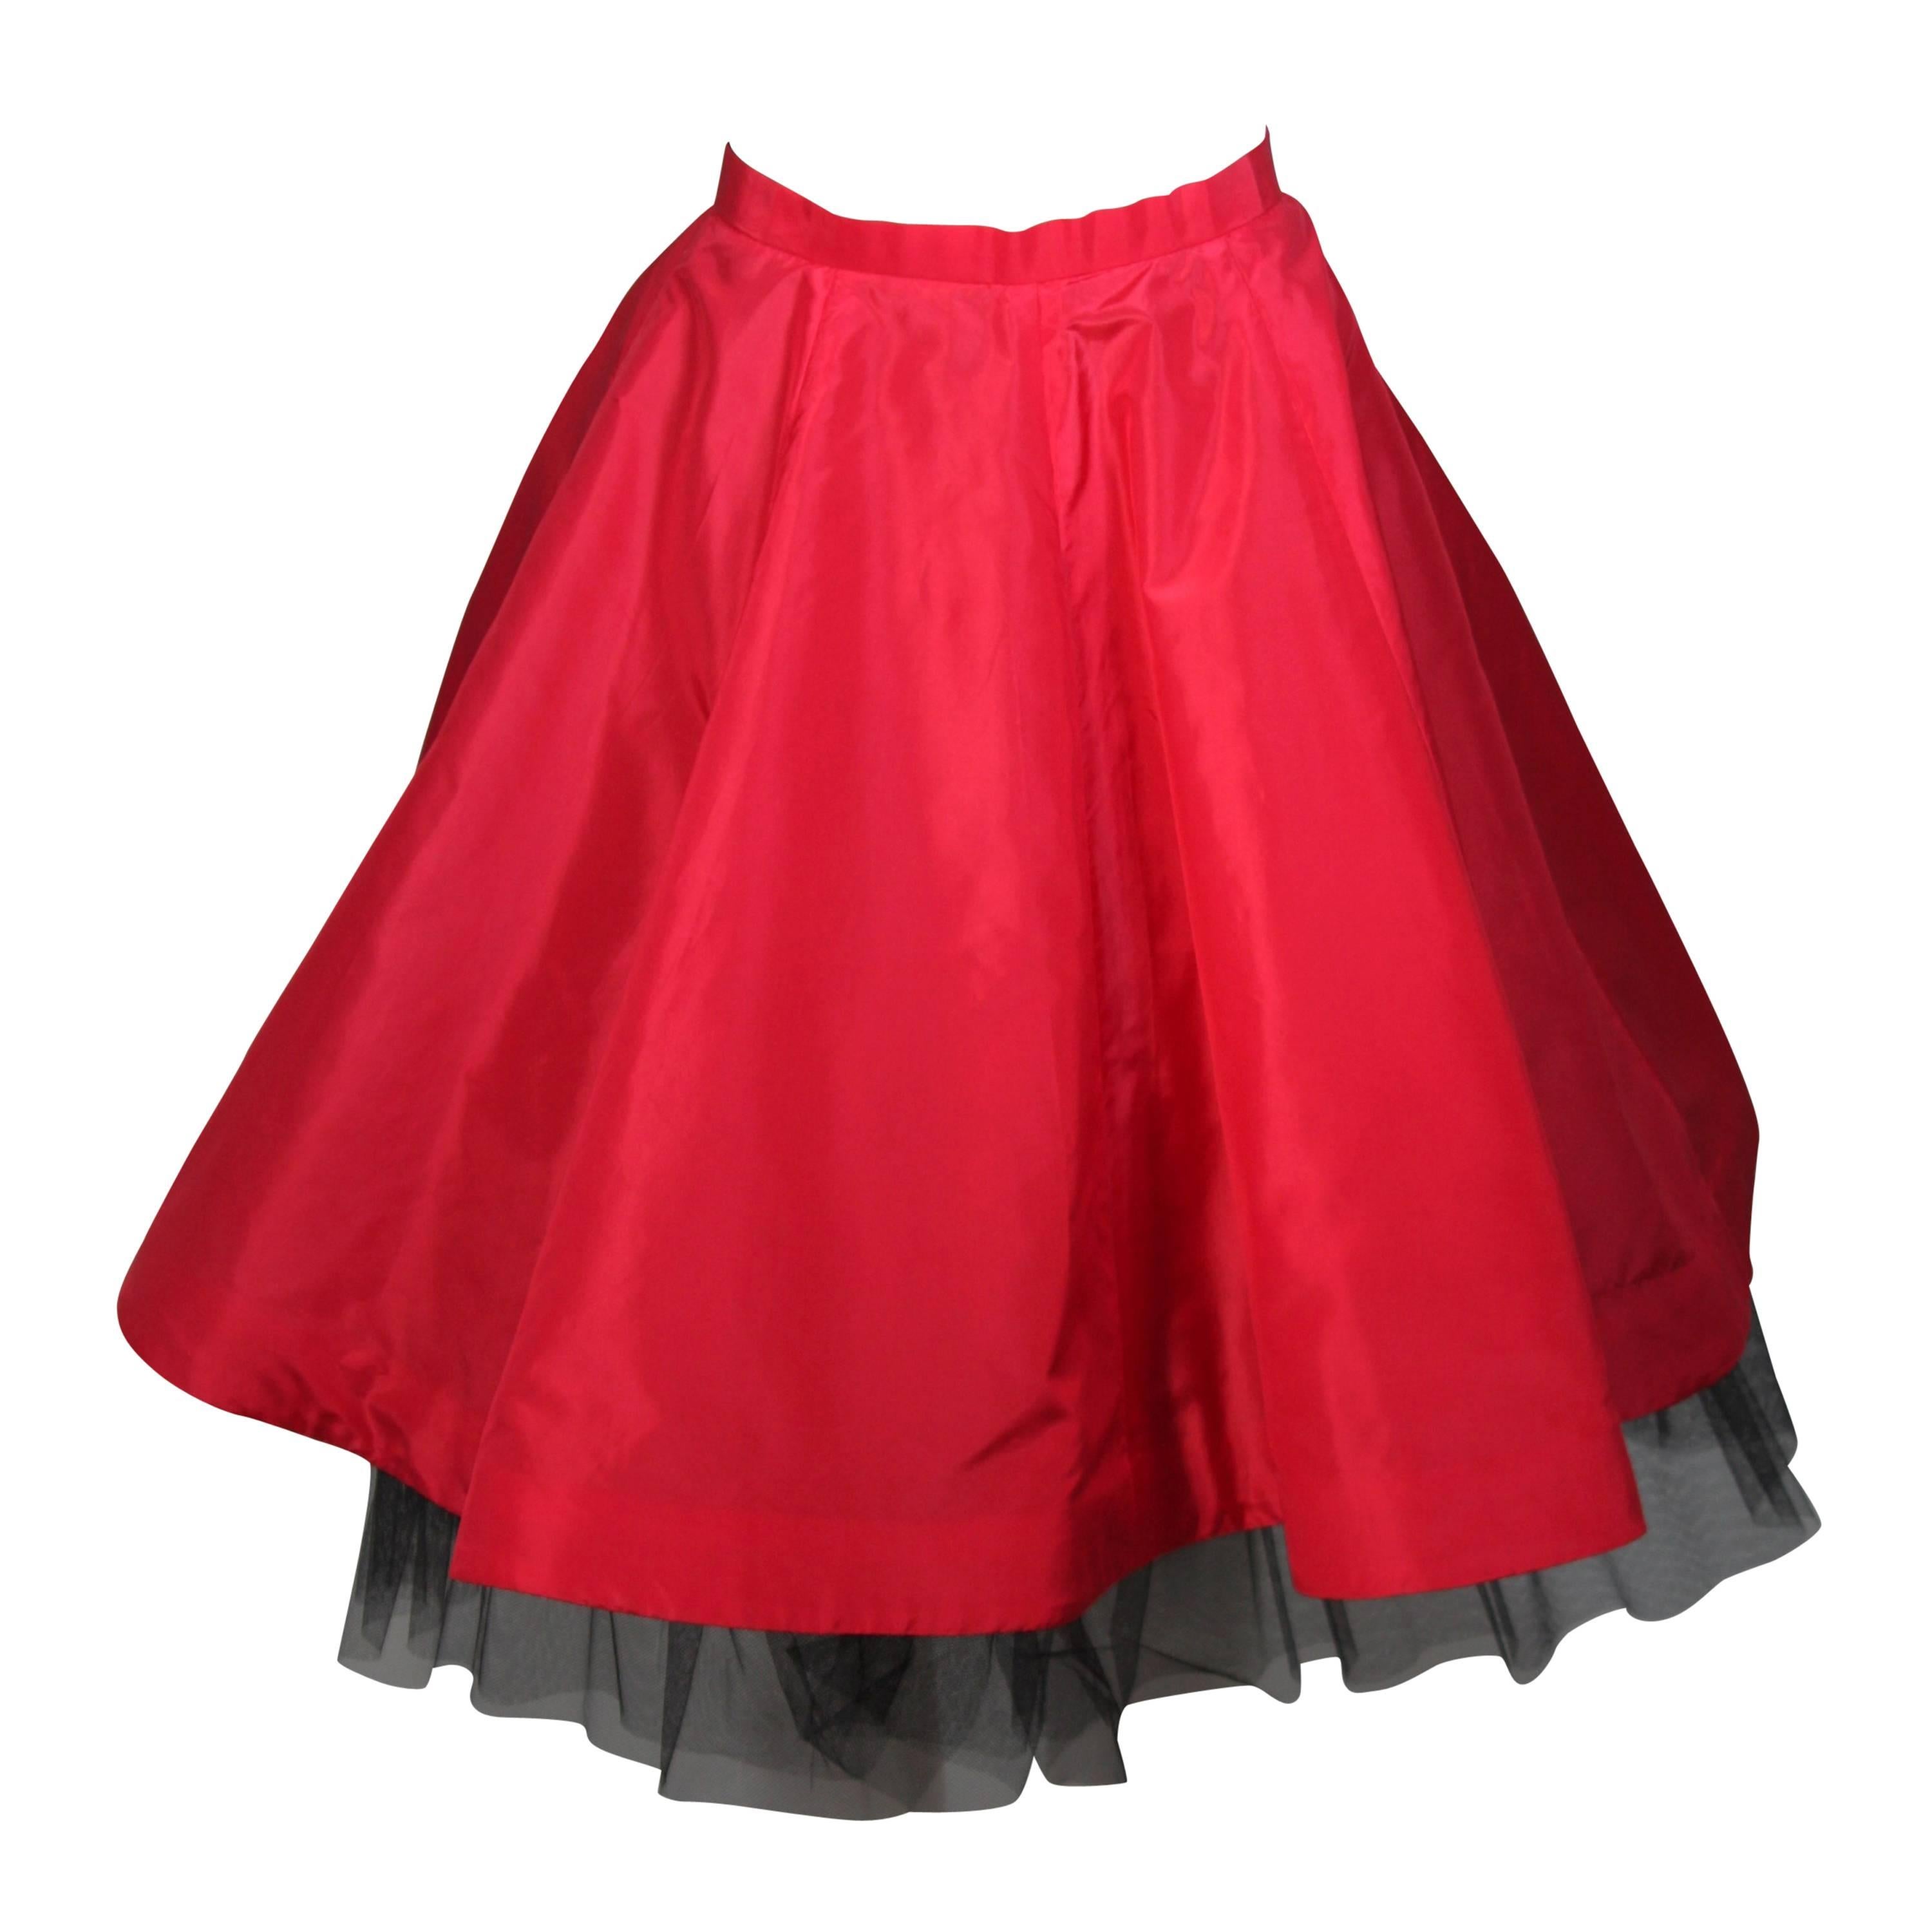 Oscar De La Renta Red Skirt with Crinoline Size 4